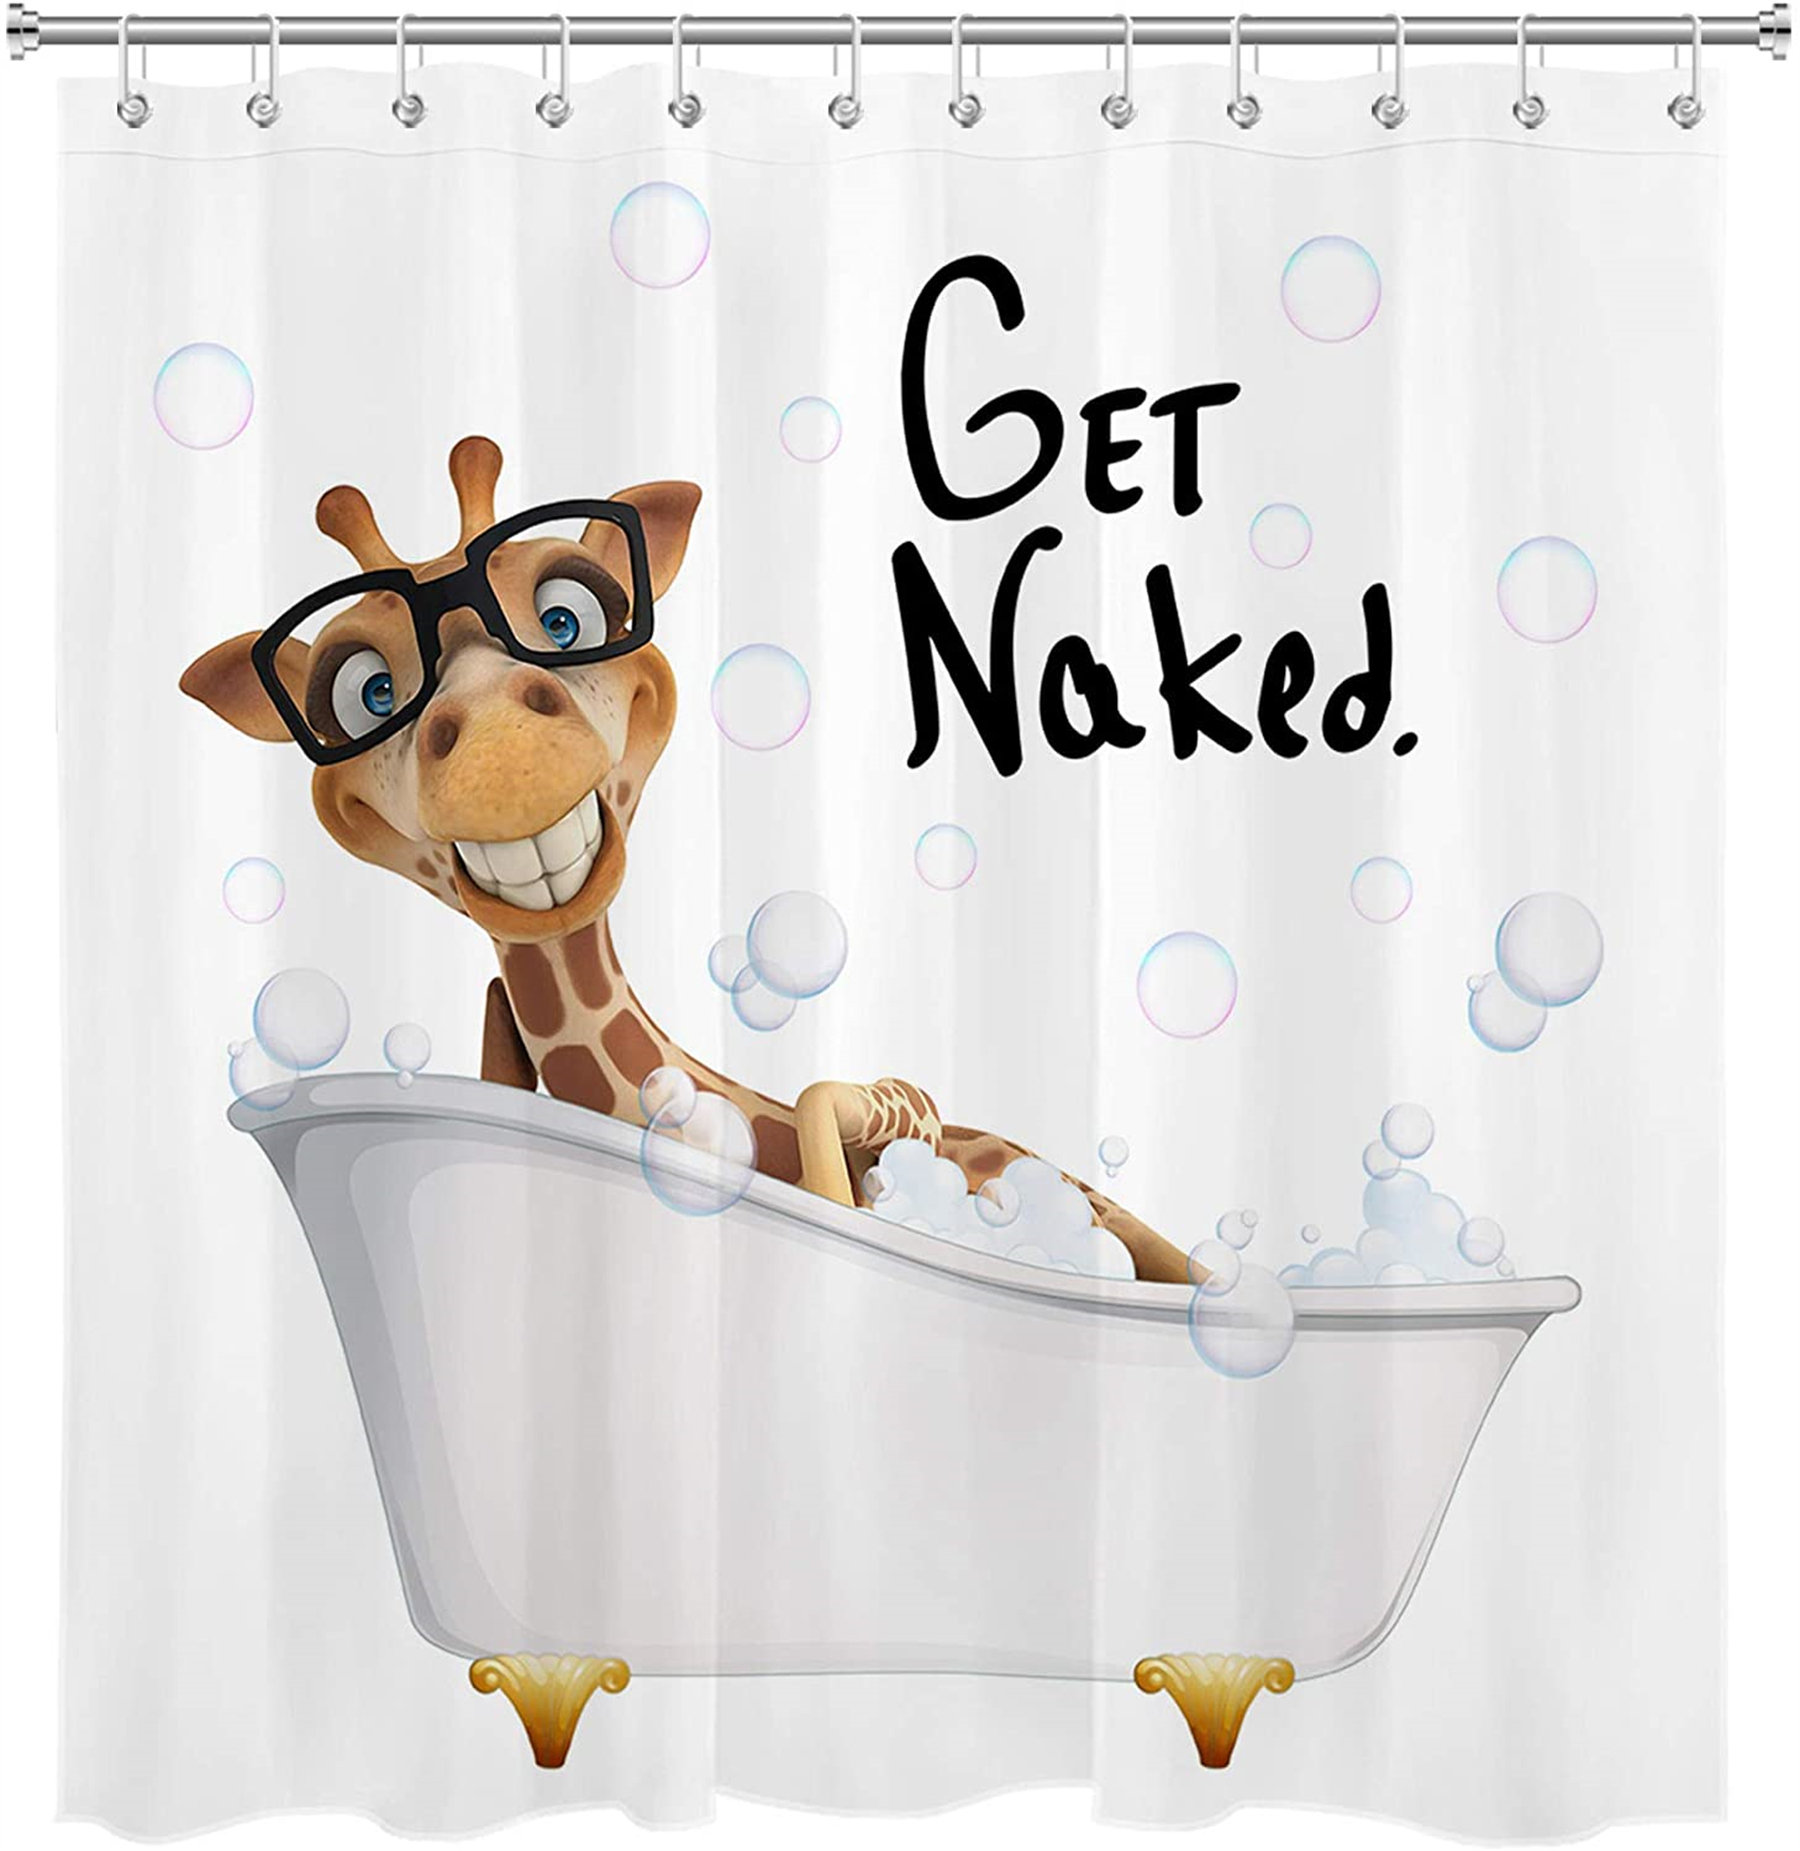 Funny Bear Bathing Bathtub Get Naked Shower Curtain Bathroom Accessory Sets 